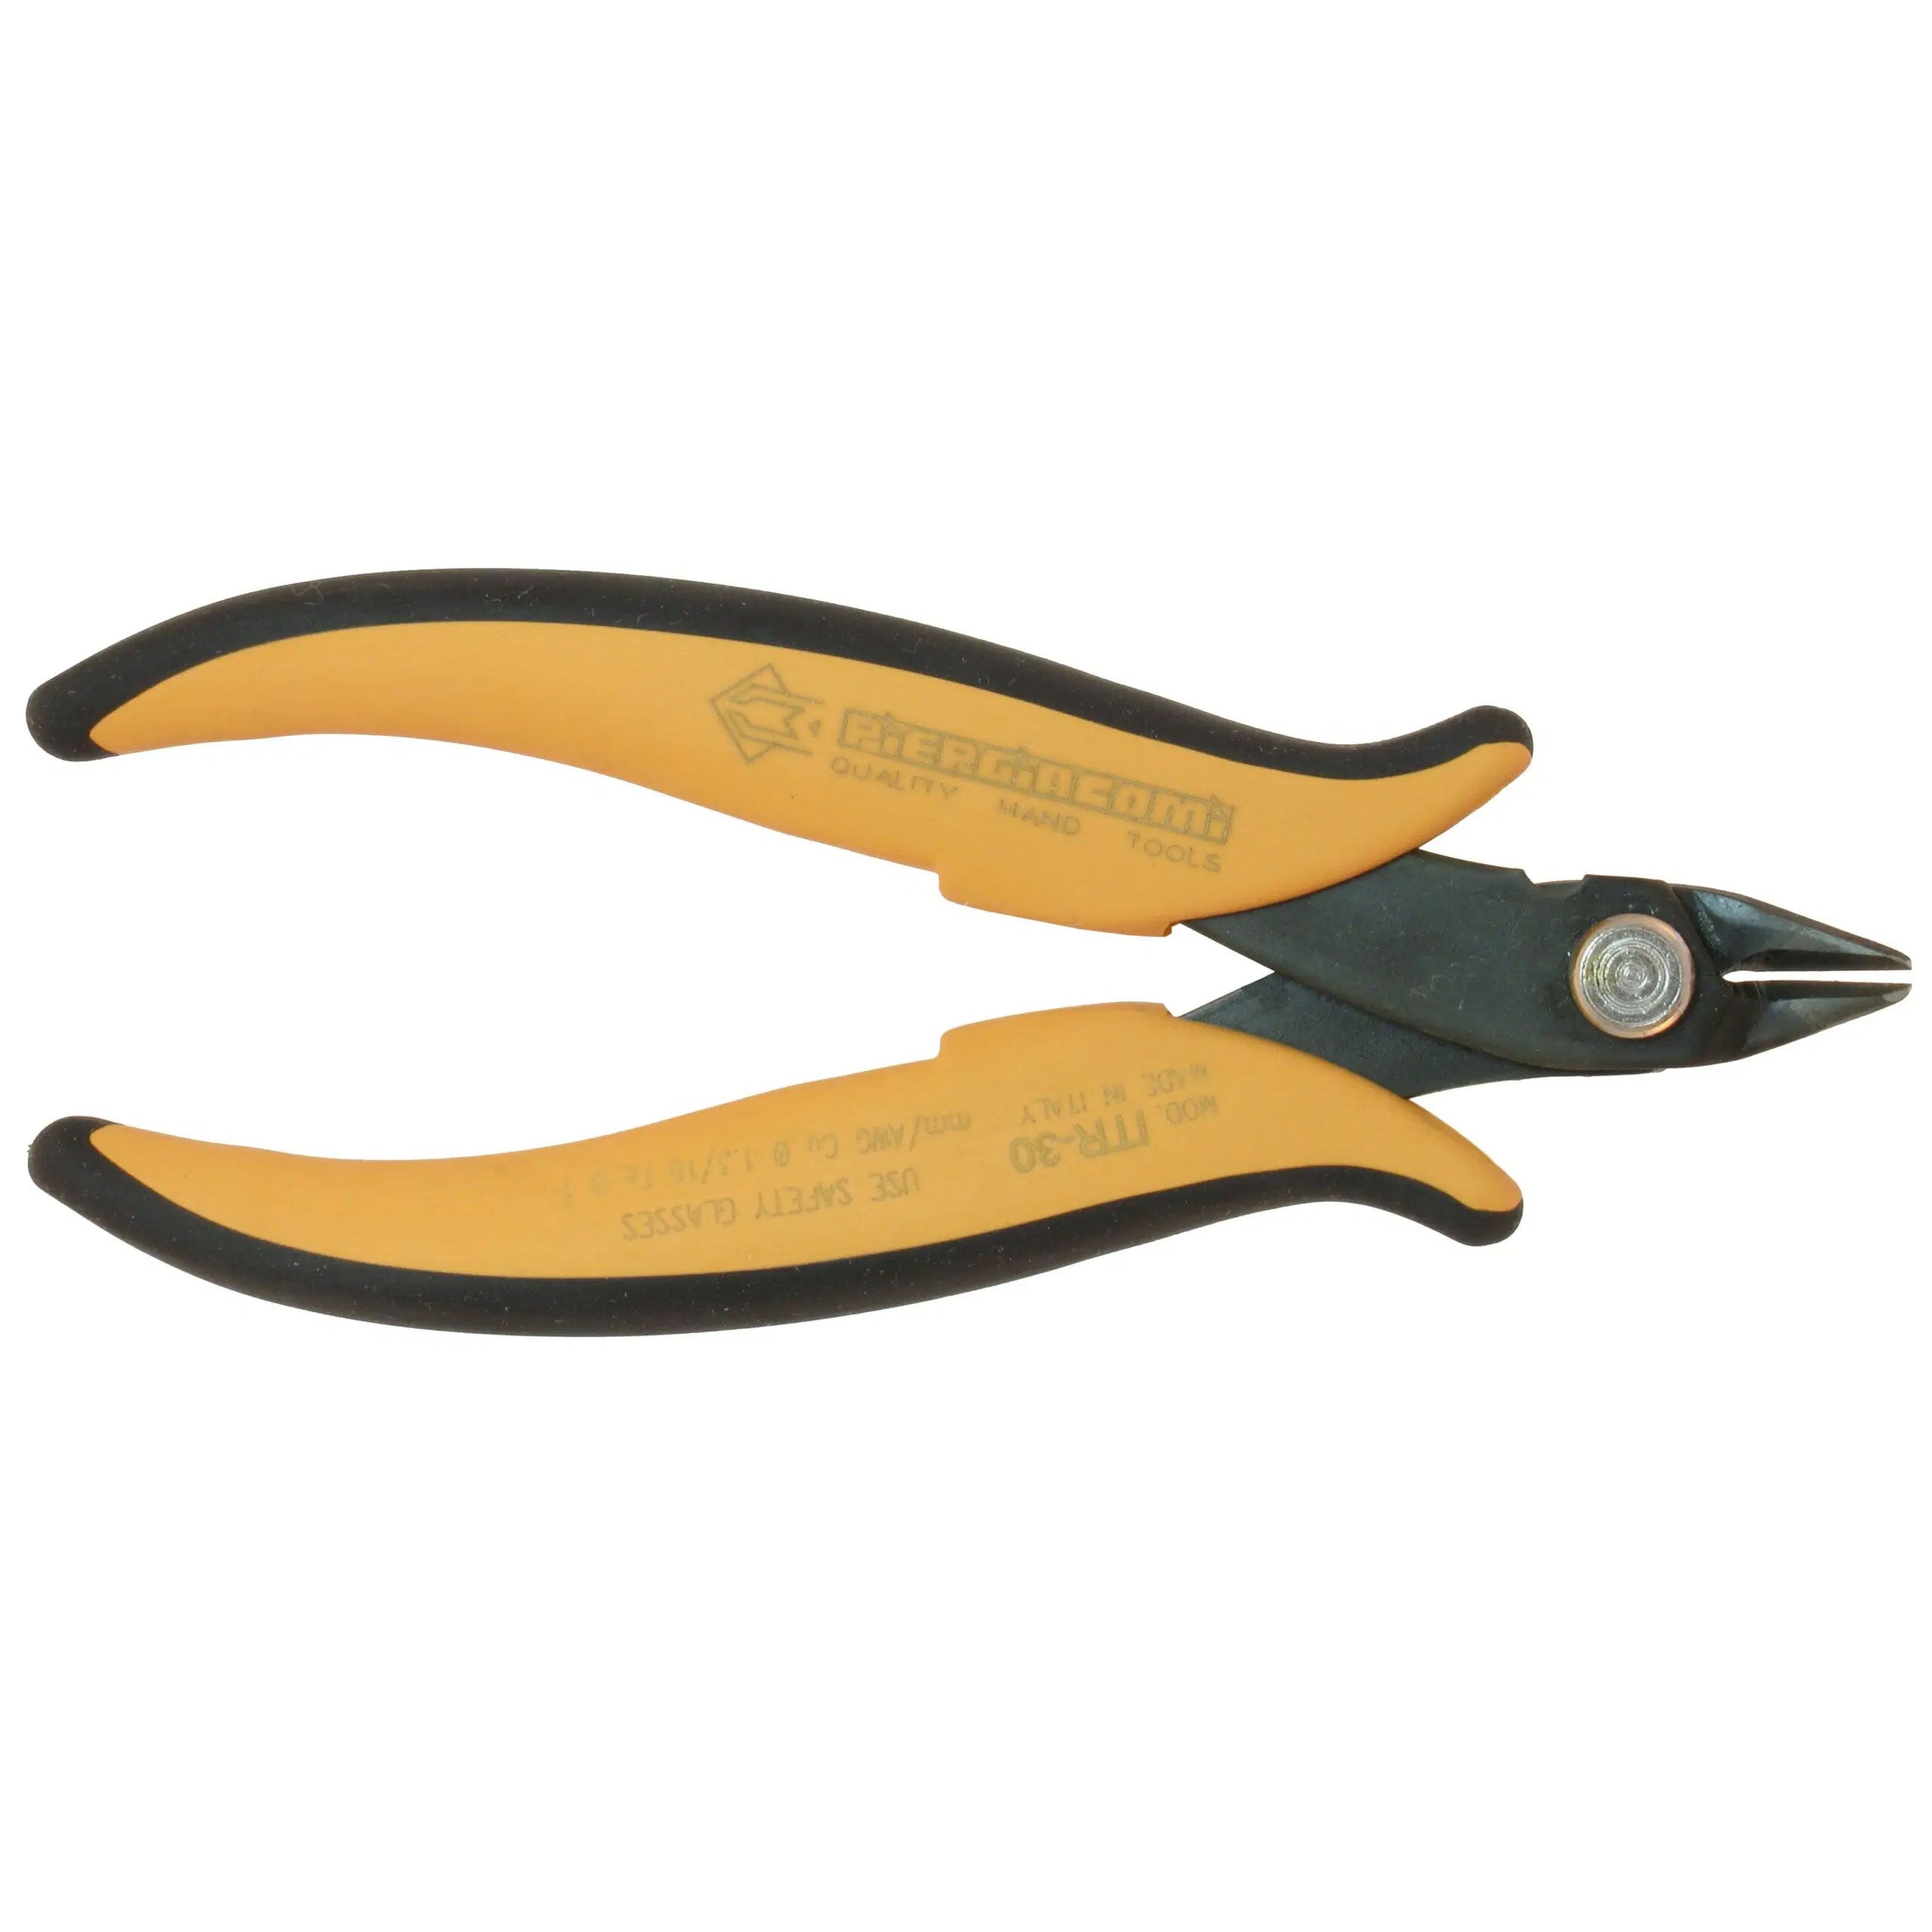 Piergiacomi Strong Flush Cutter Blade Induction Treatment For Sale Online  – Mektronics